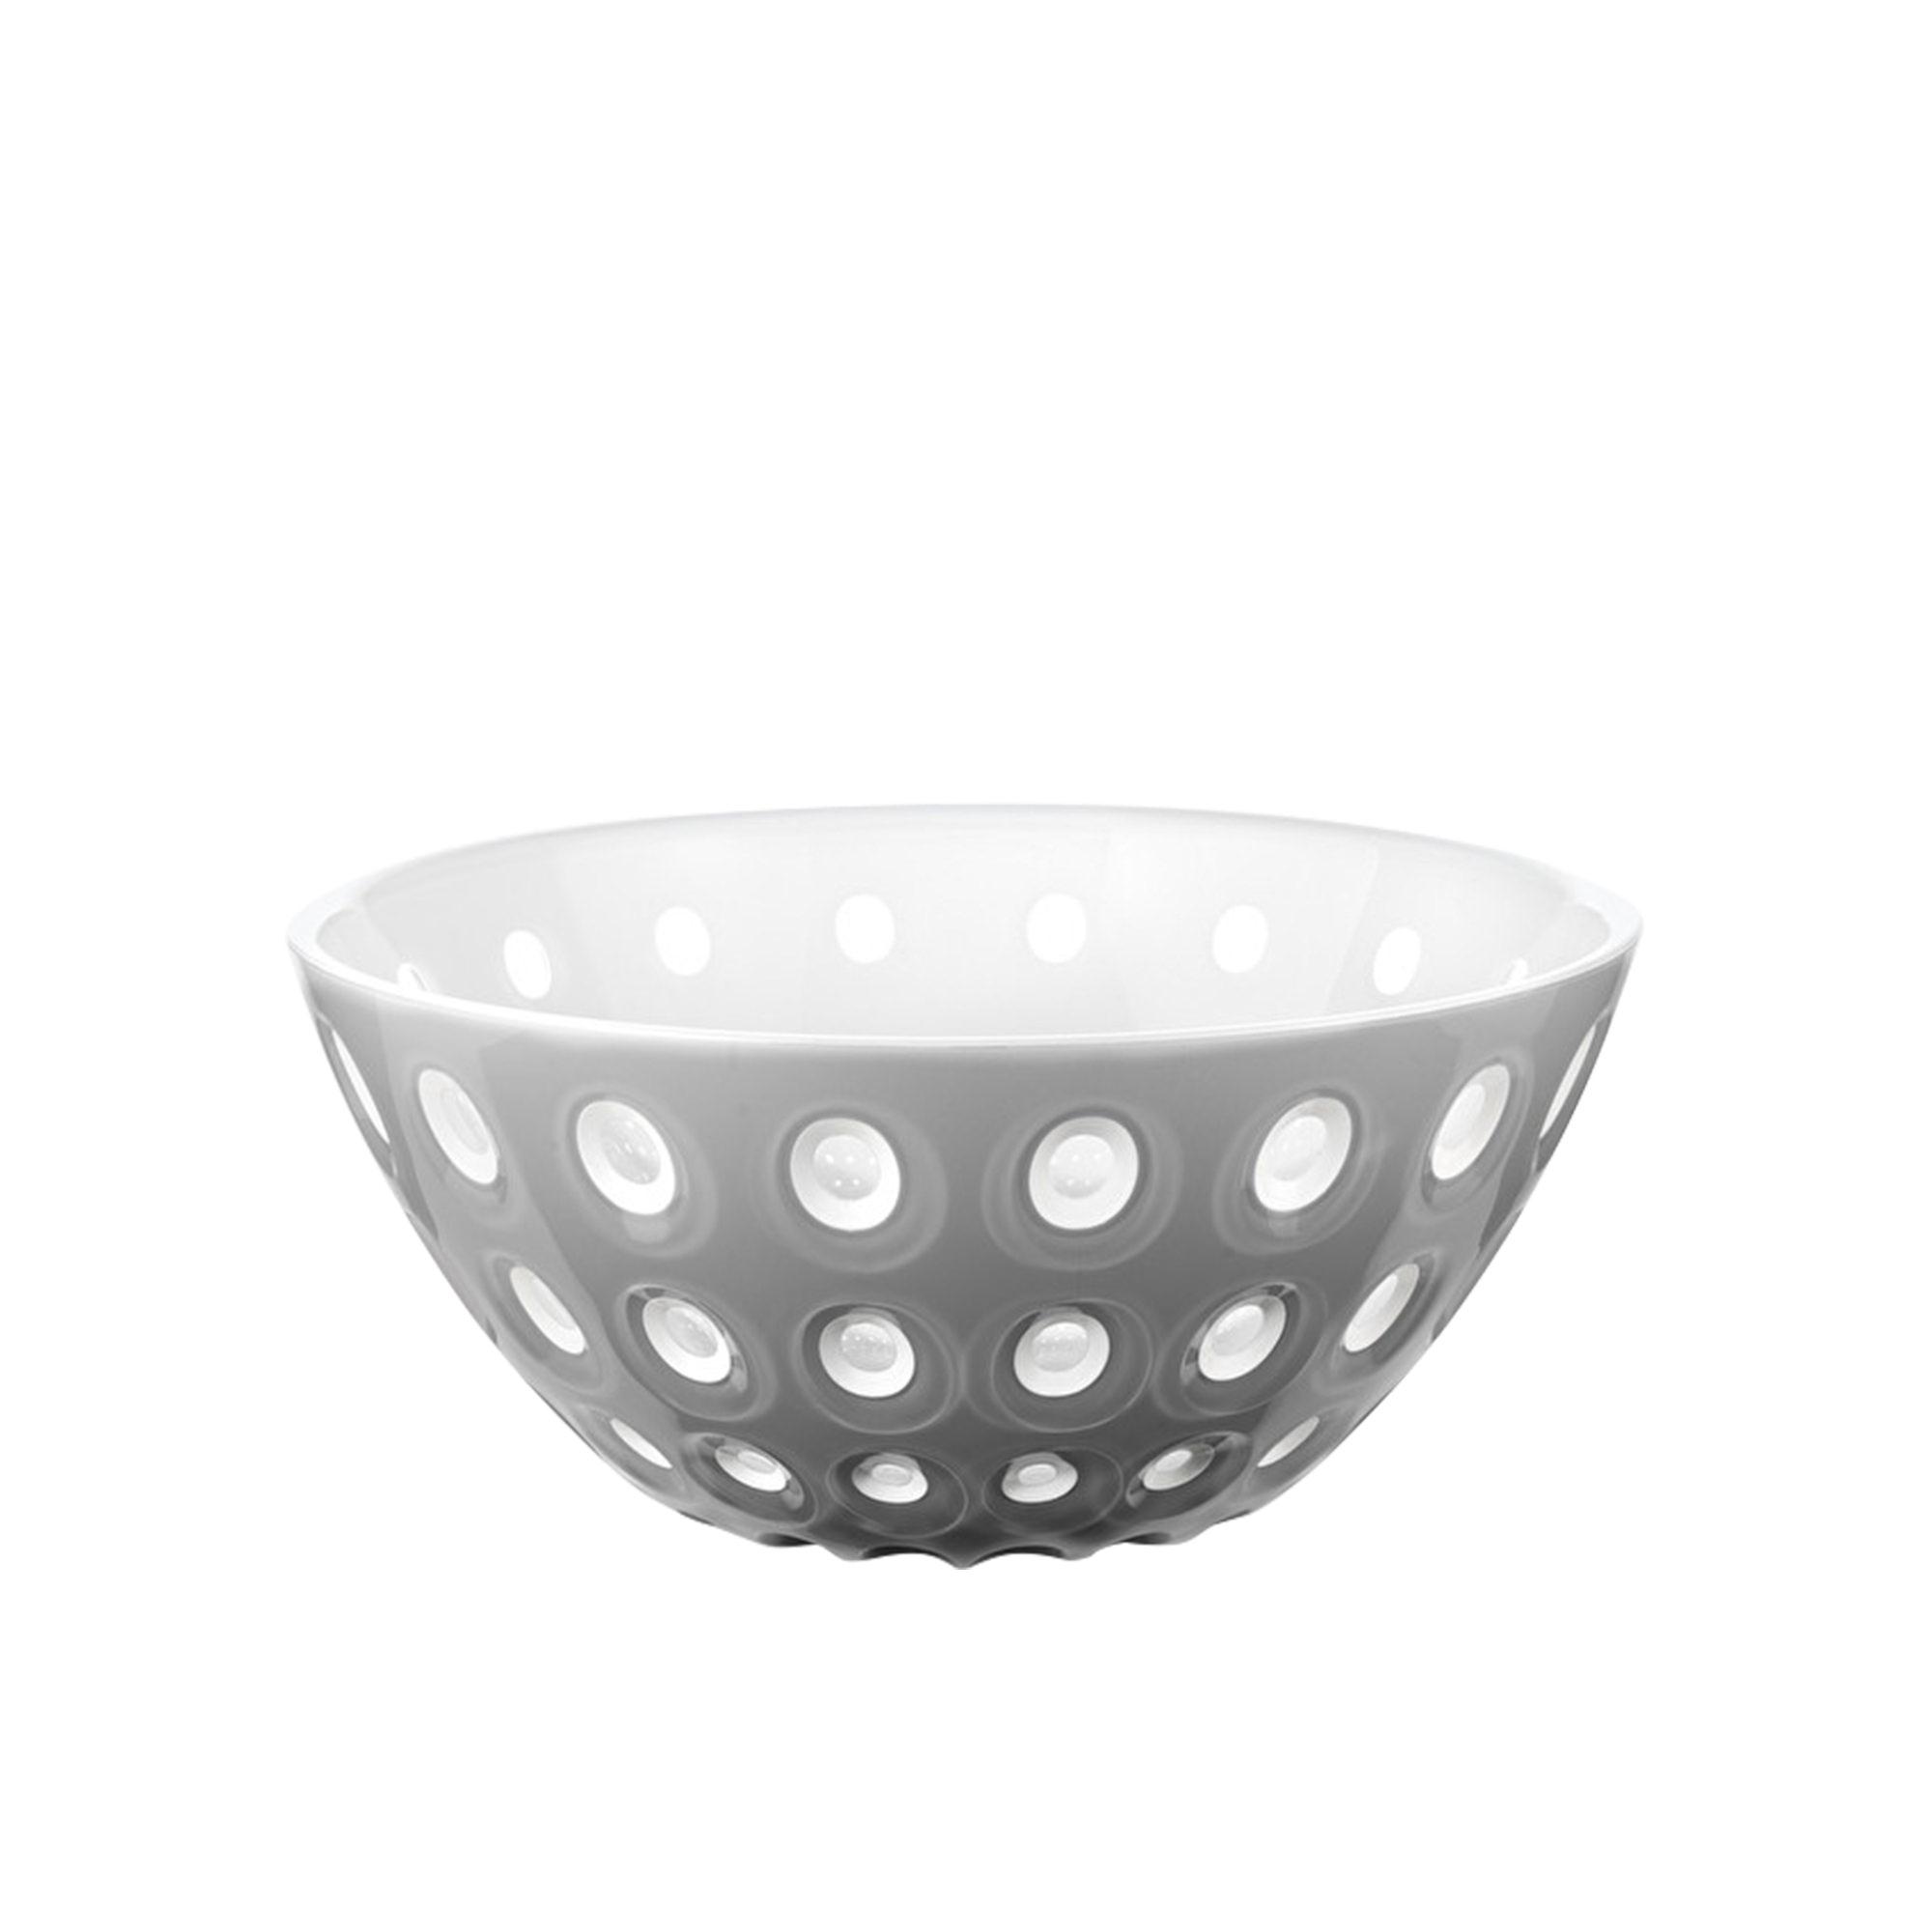 Guzzini Le Murrine Serving Bowl 25cm Grey & White Image 1